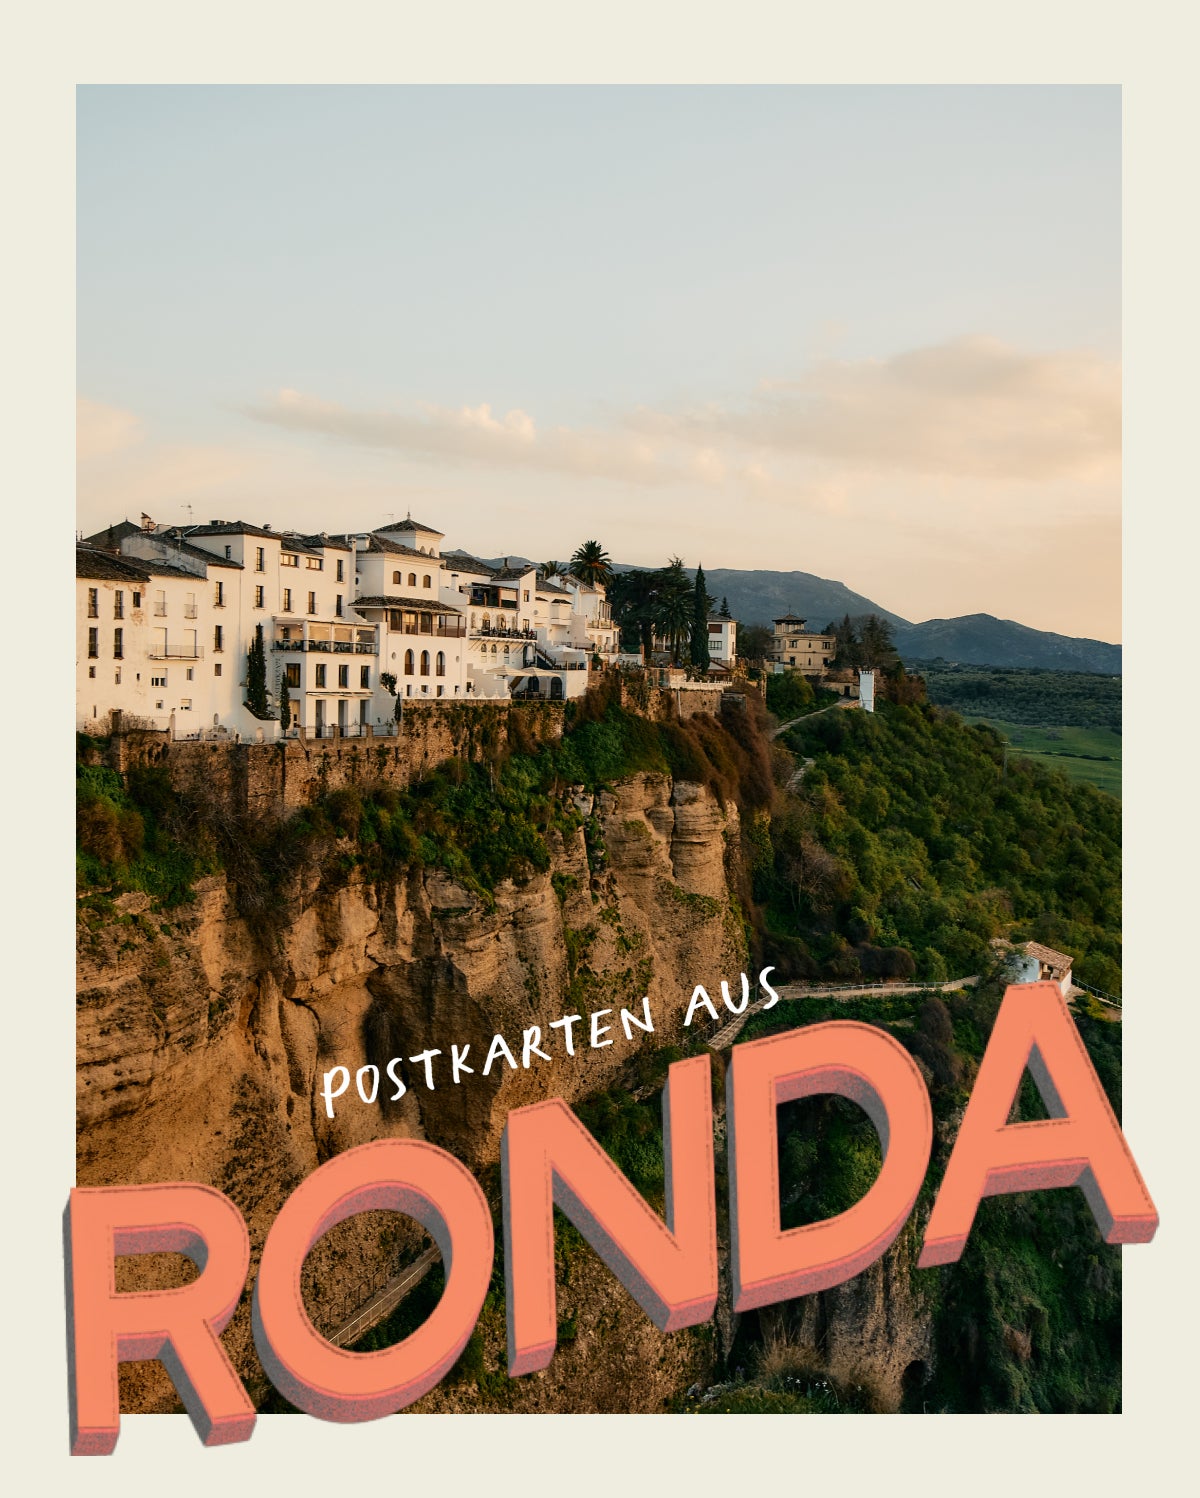 Postkarten aus Ronda